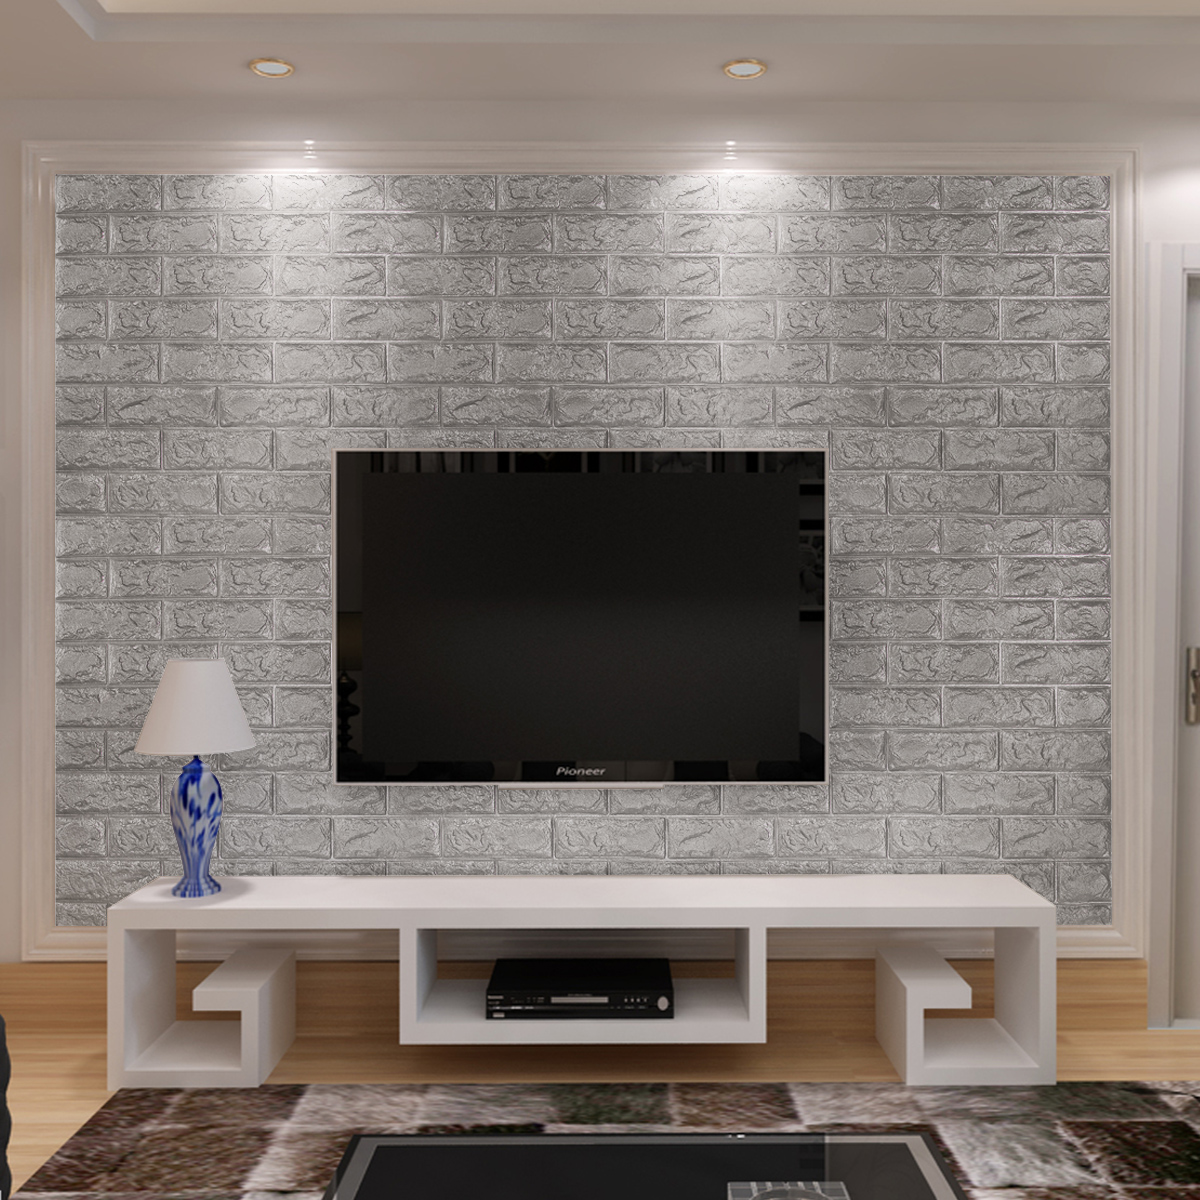 3D-Brick-Pattern-Wallpaper-Bedroom-Living-Room-Modern-Wall-Sticker-TV-Background-Decor-1195902-1